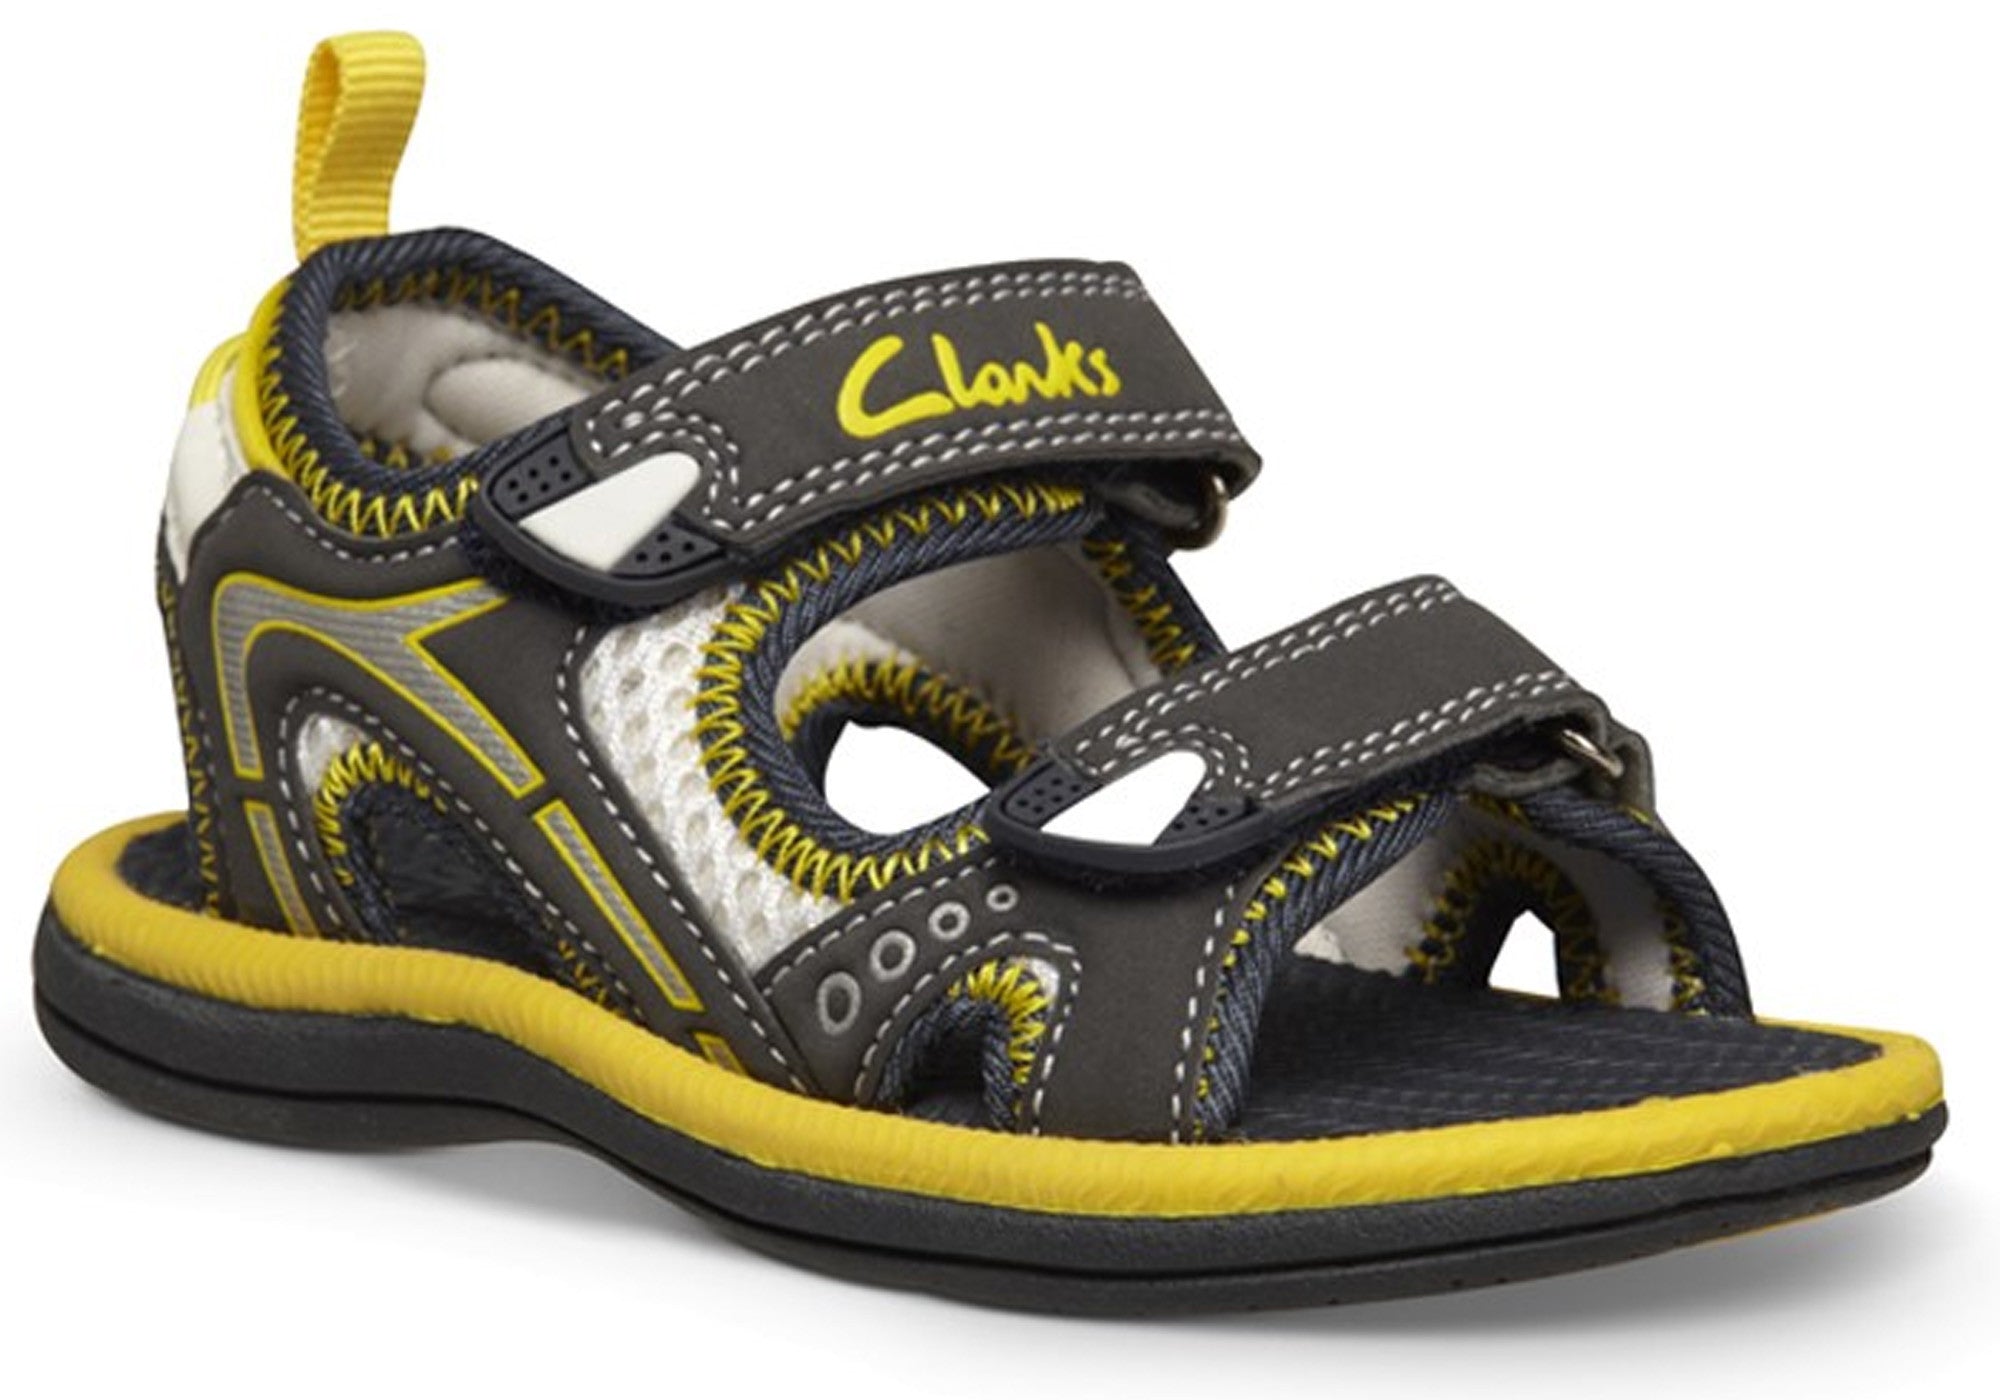 clarks adjustable sandals